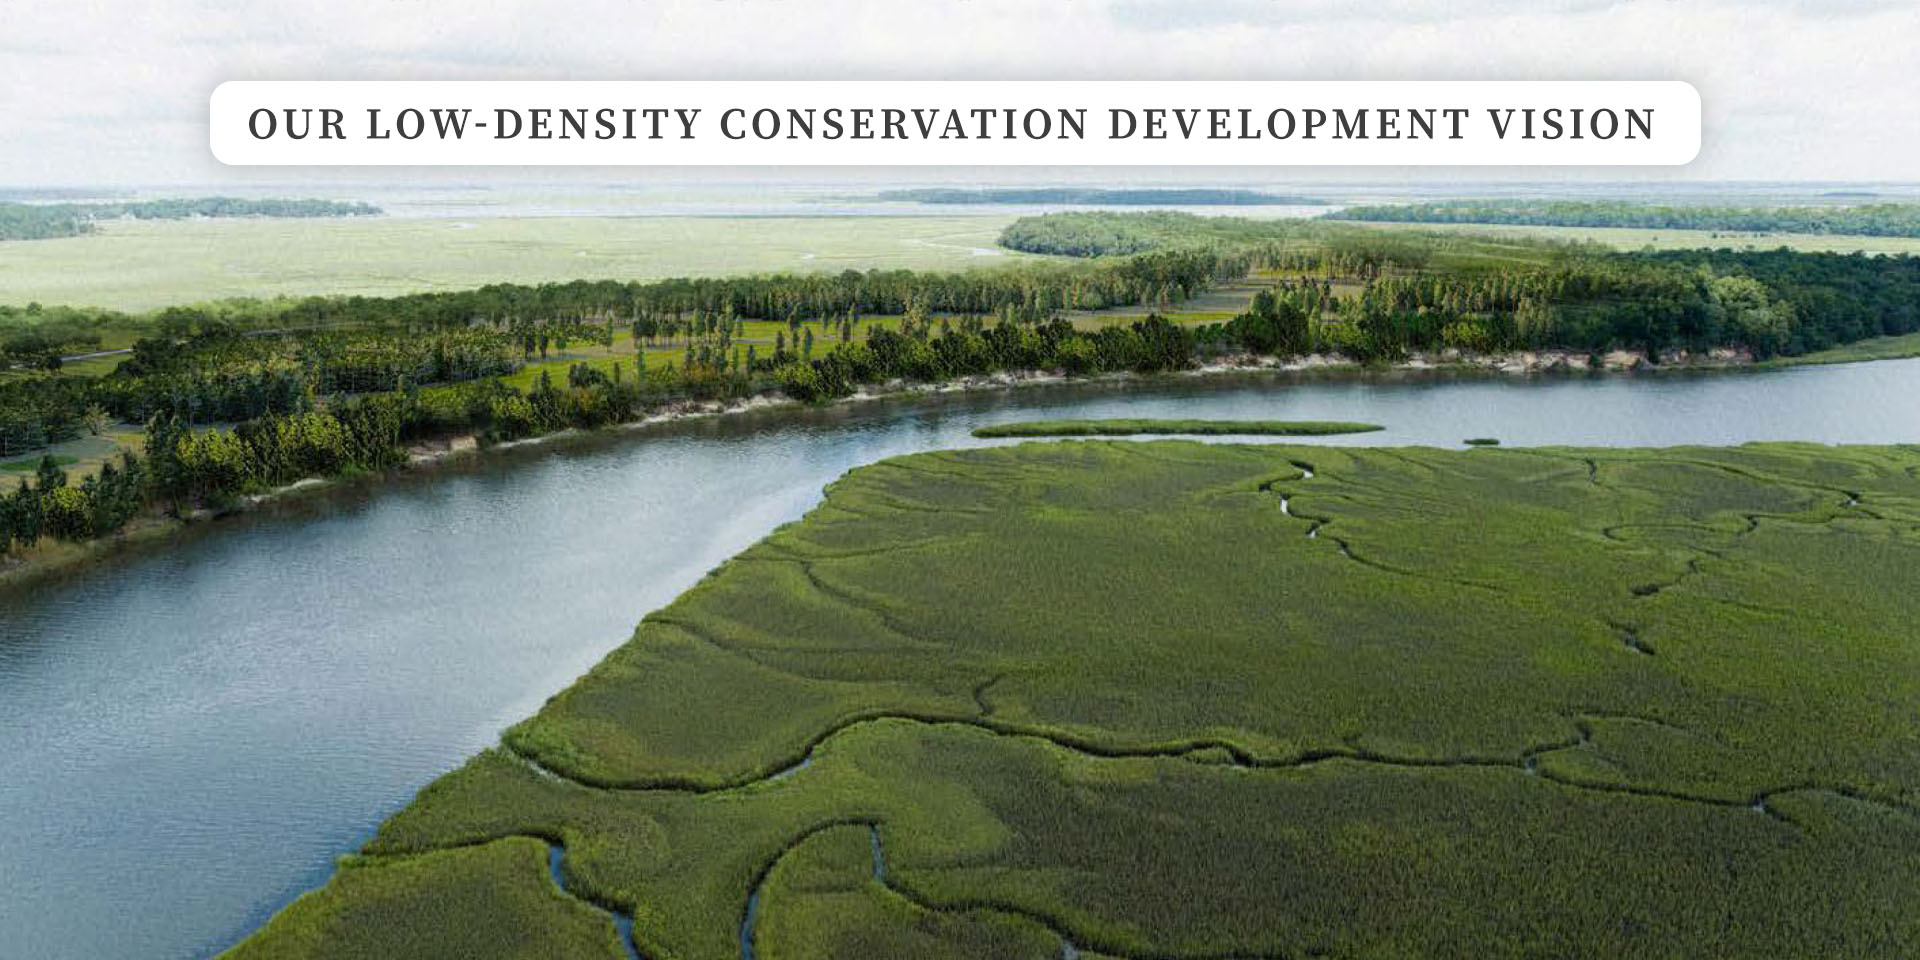 Along Village Creek: Our Low-Density Conservation Development Vision